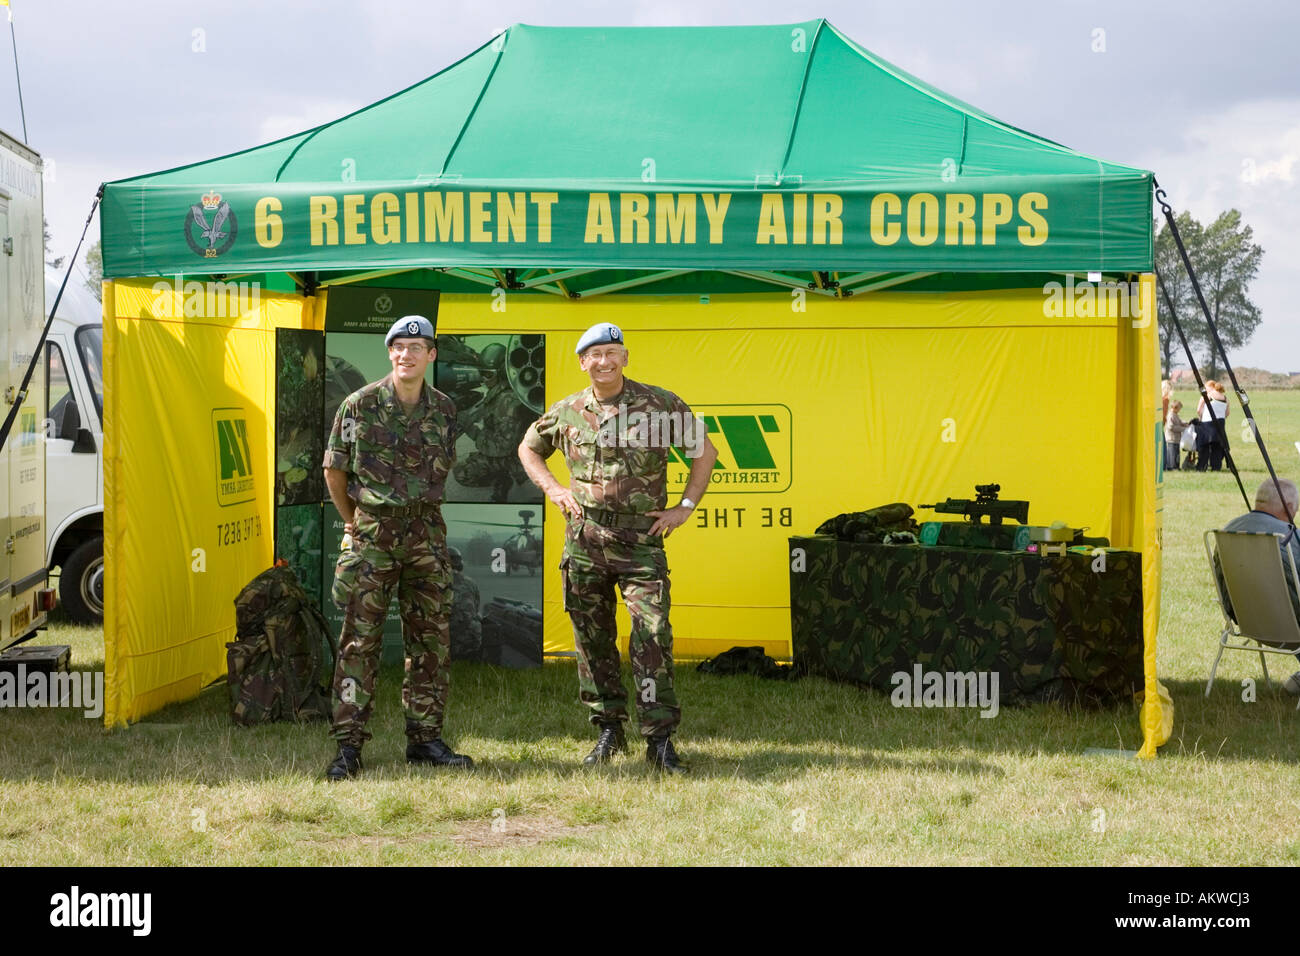 Territorial Army recruitment stand, UK Stock Photo